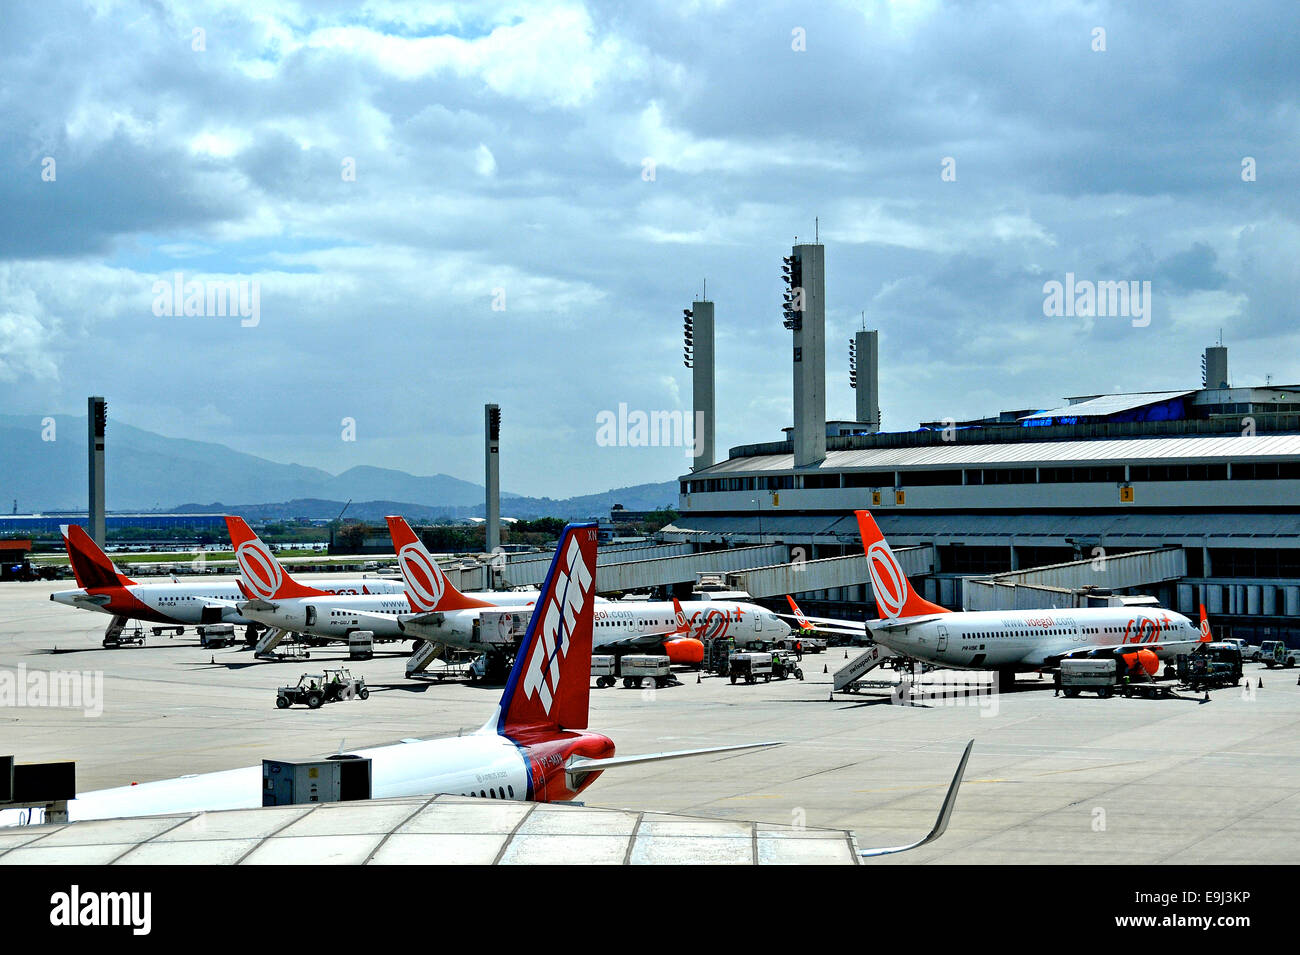 Galeao international airport Rio de Janeiro Brazil Stock Photo